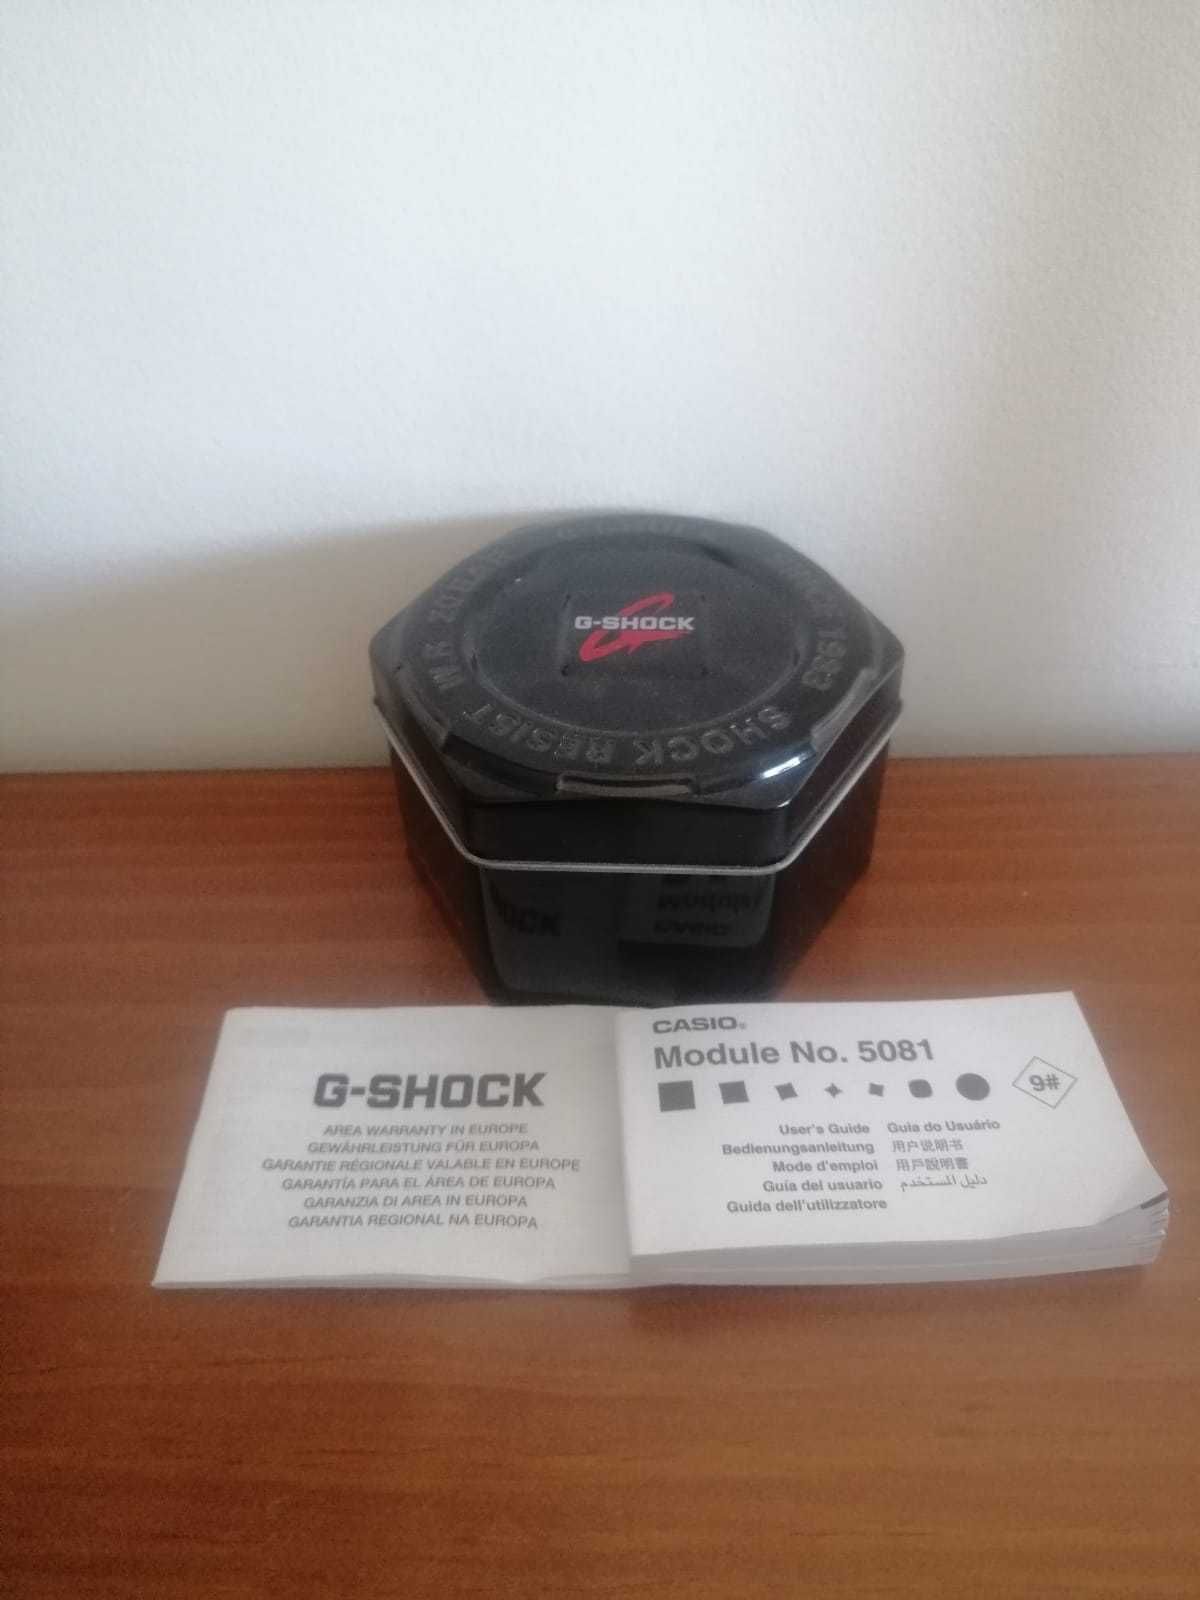 Relogios G-Shock - GA-100GBX-1A9 e GXW-56-1A